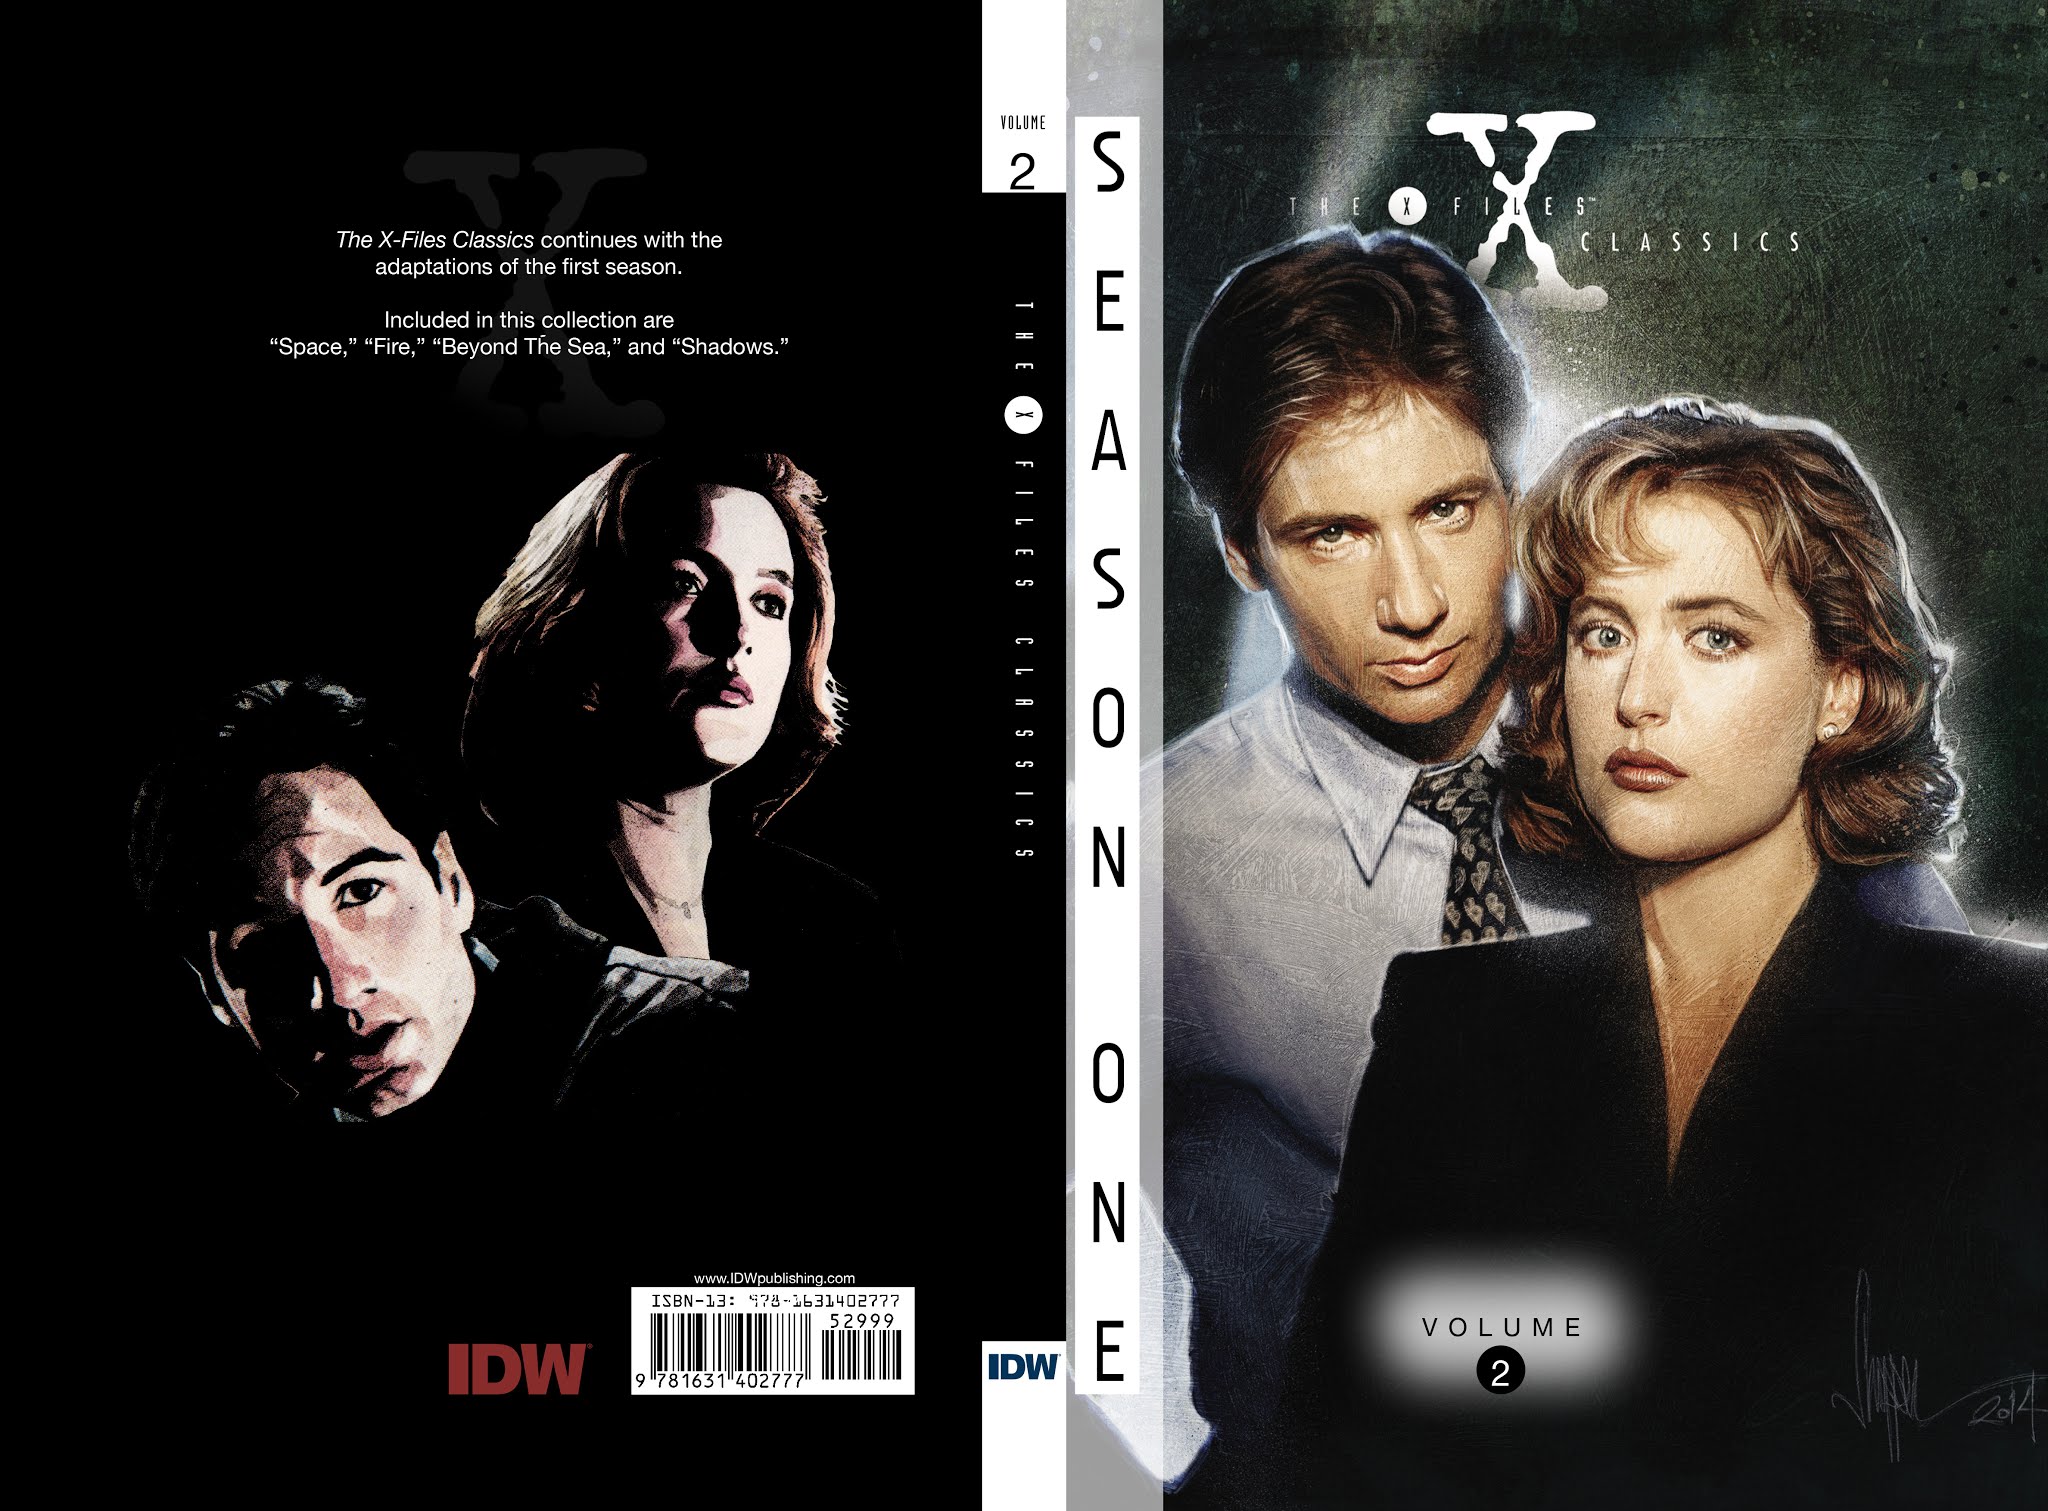 The x-files постеры 1990. X files тетрадь. X-files аудиокассета. X files Drive.